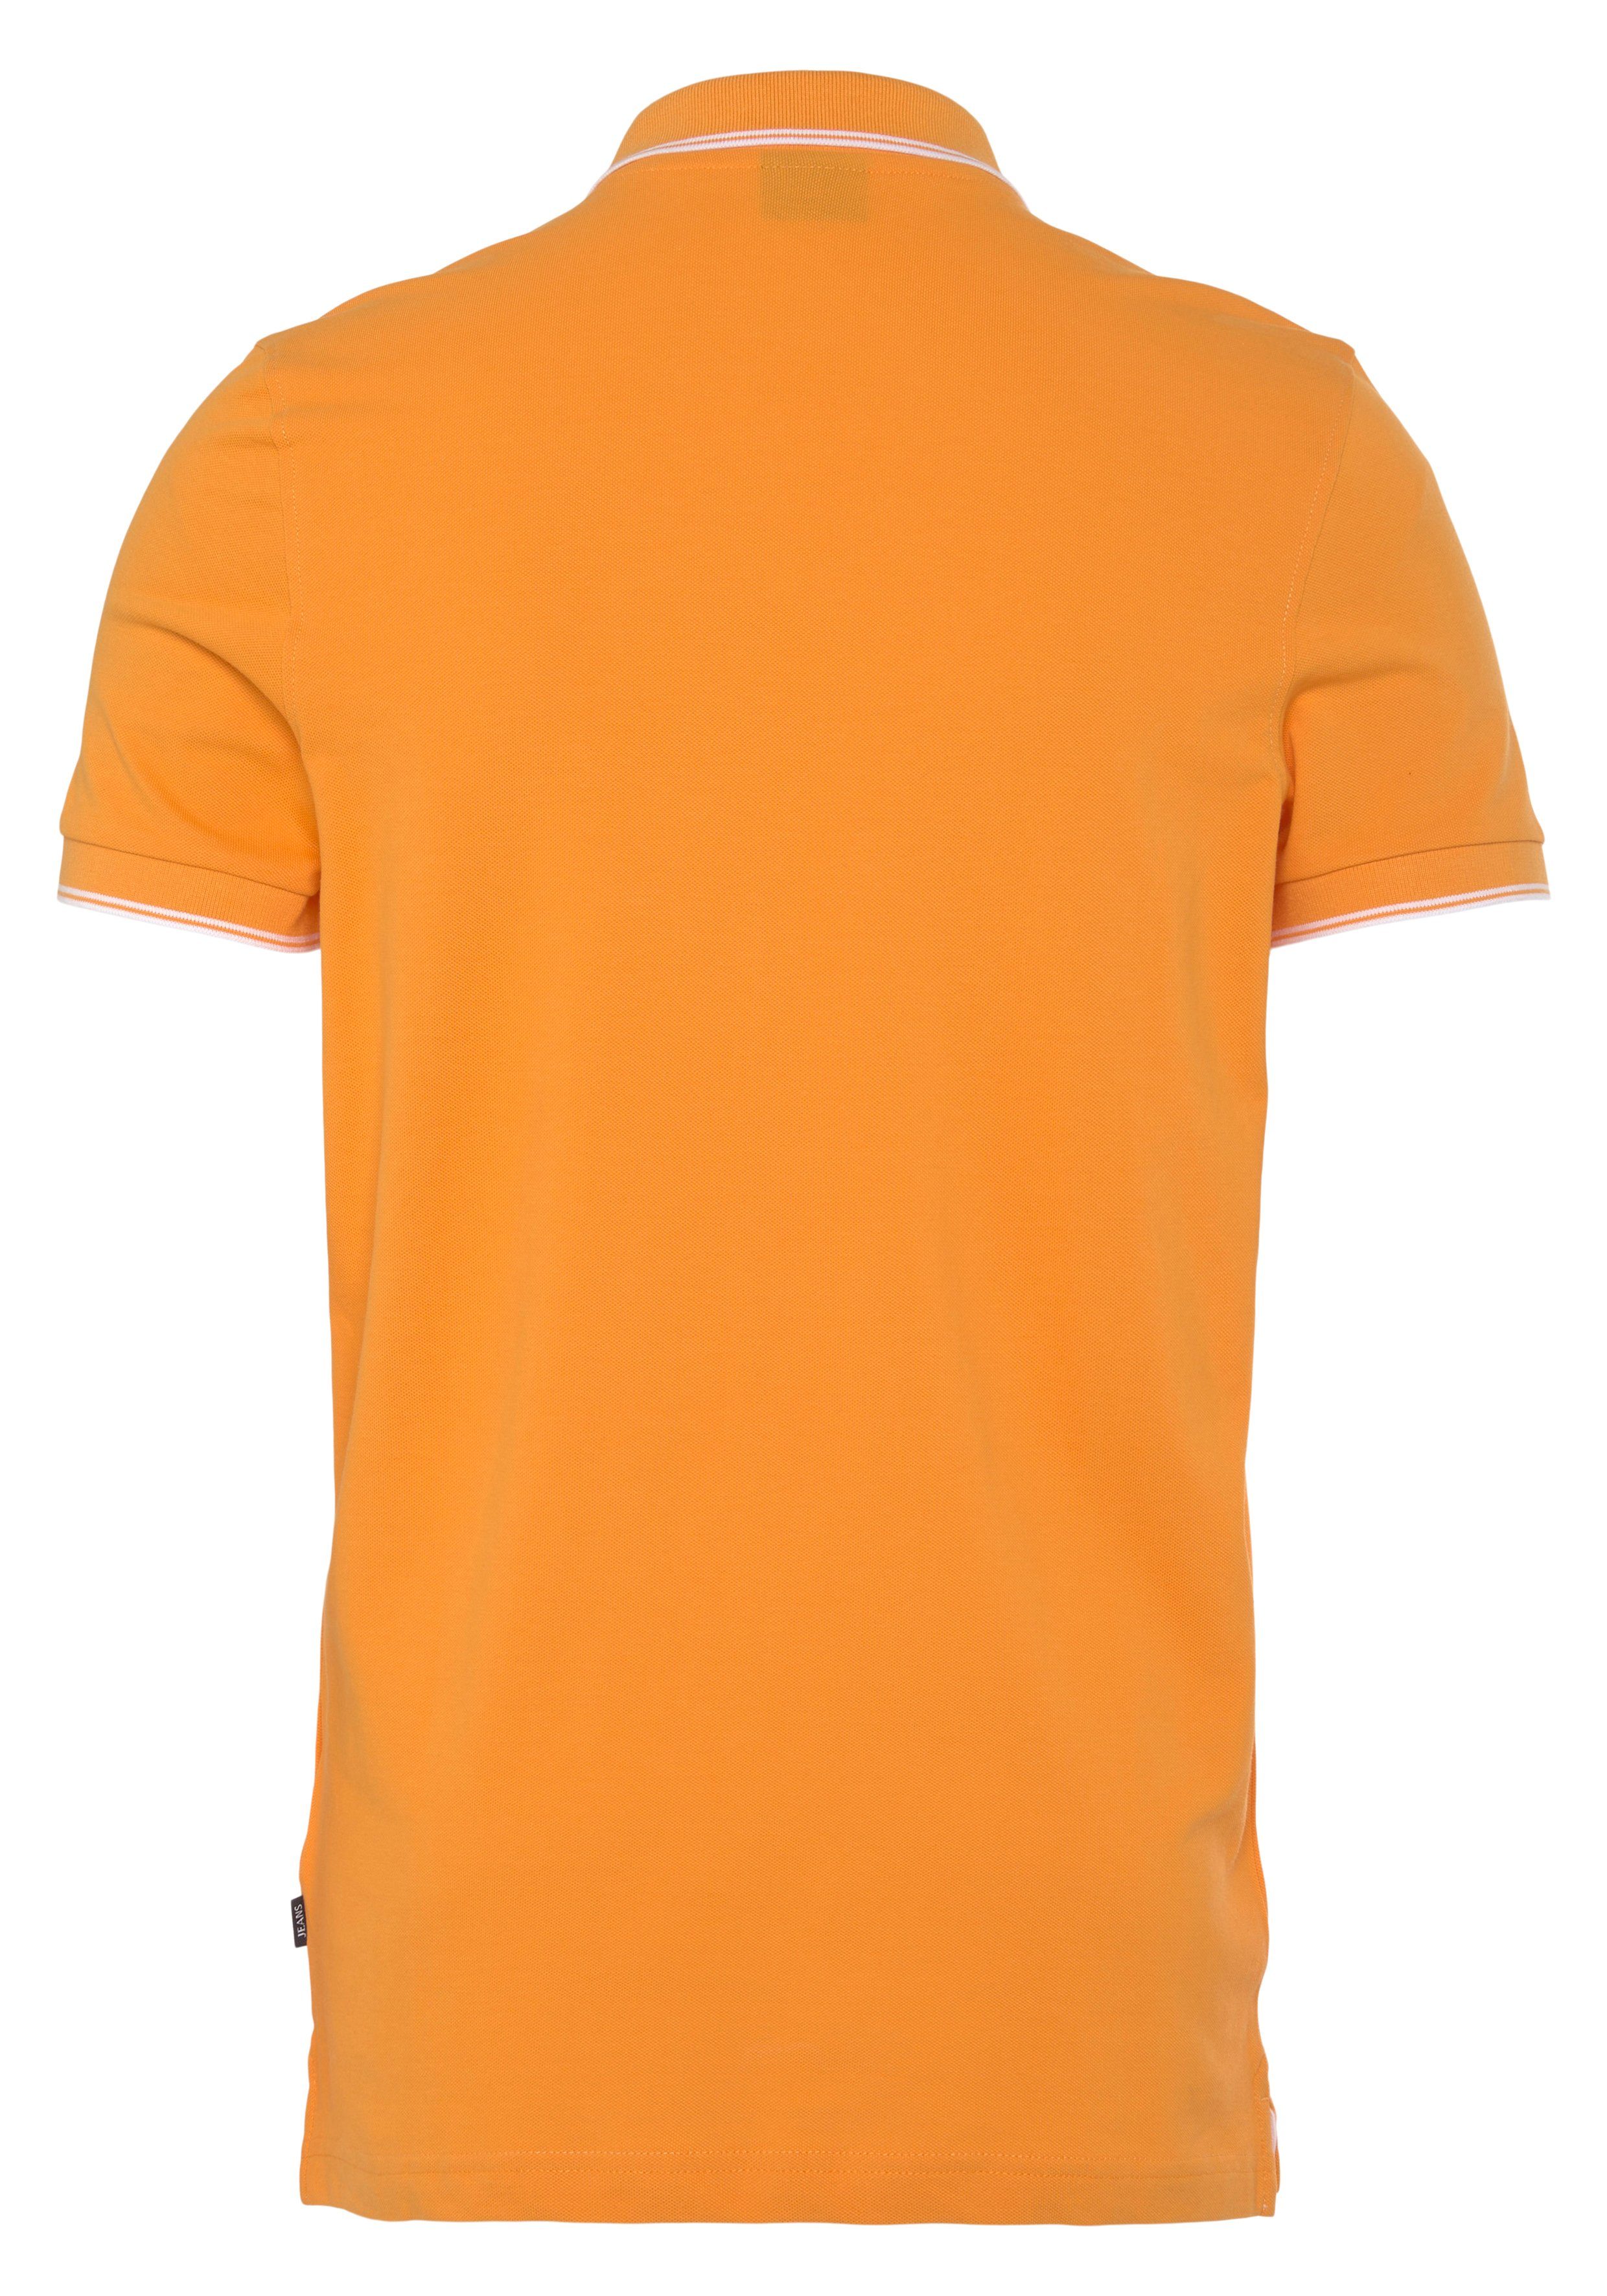 Agnello orange JJJ-04 Jeans Joop Joop! kontrastfarbener mit Poloshirt Logo-Stickerei